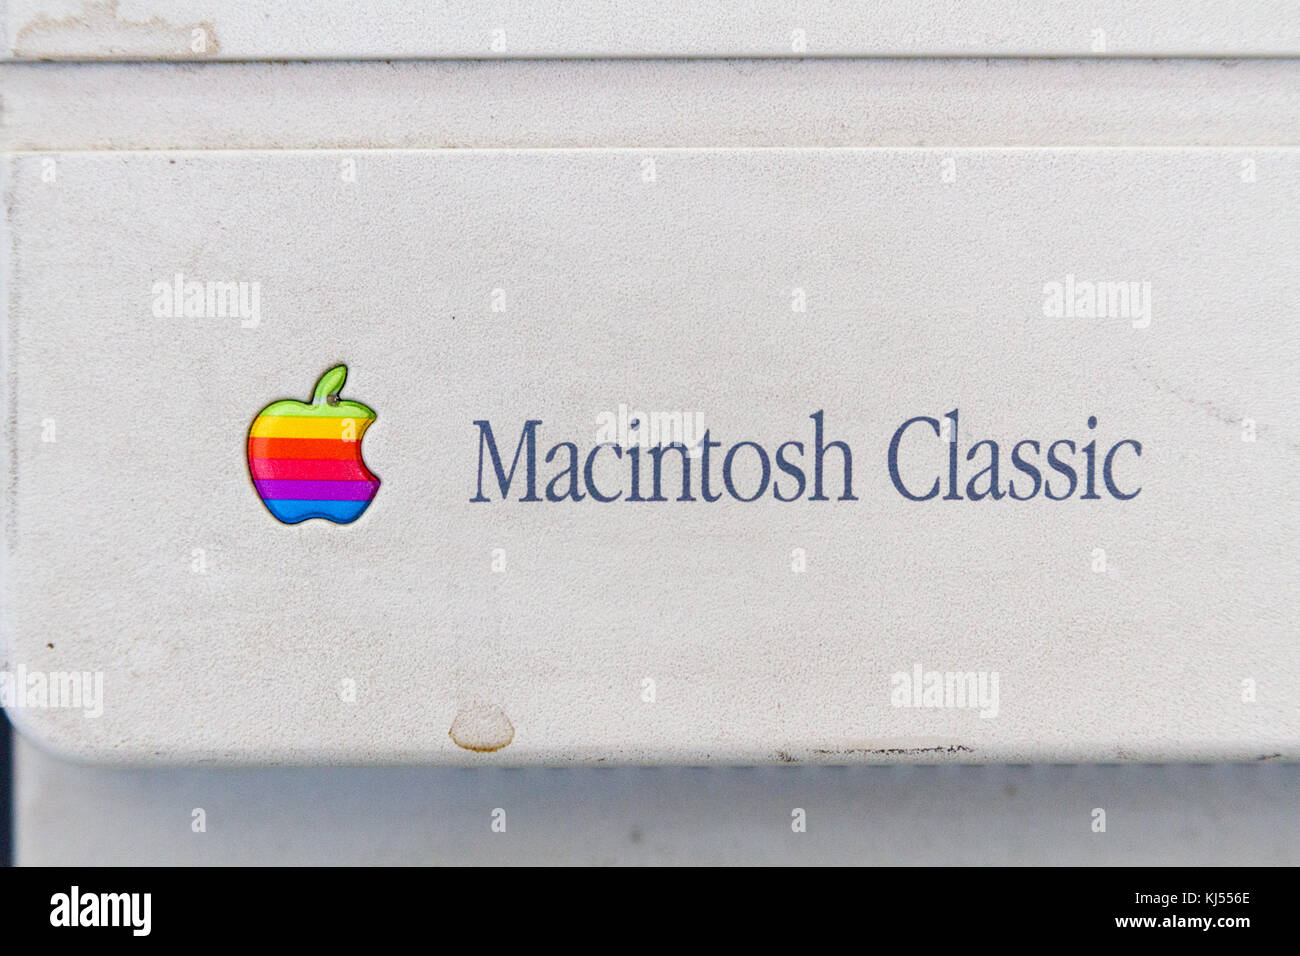 Colorful Apple logo on Macintosh Classic computer. Stock Photo